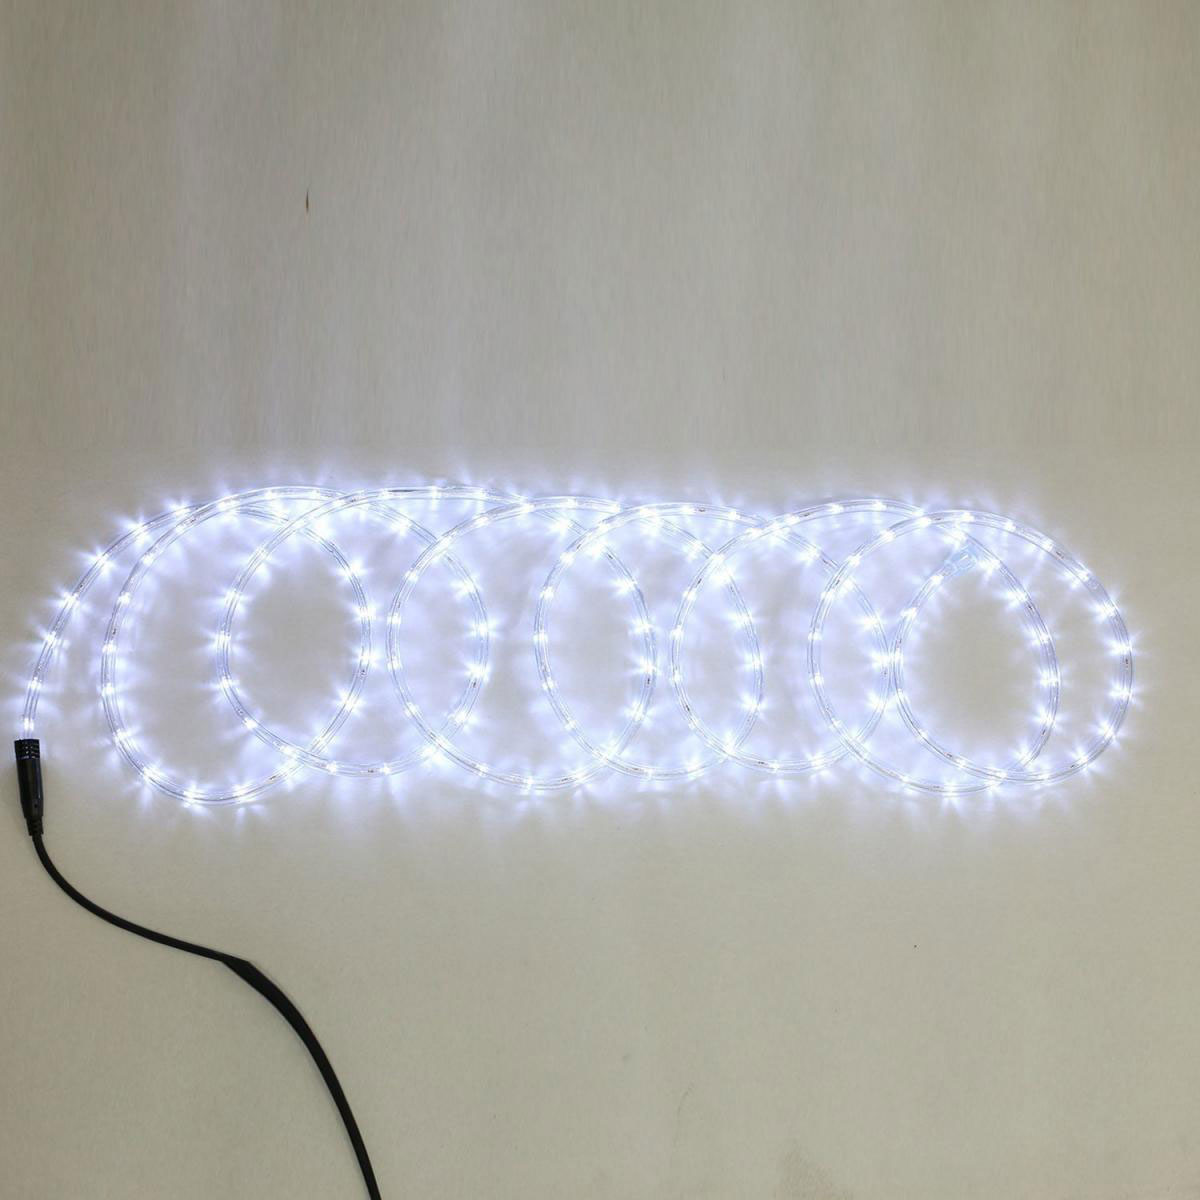 Flector LED-Lichtschlauch Multicolor 9 m bunt, bunt, 900